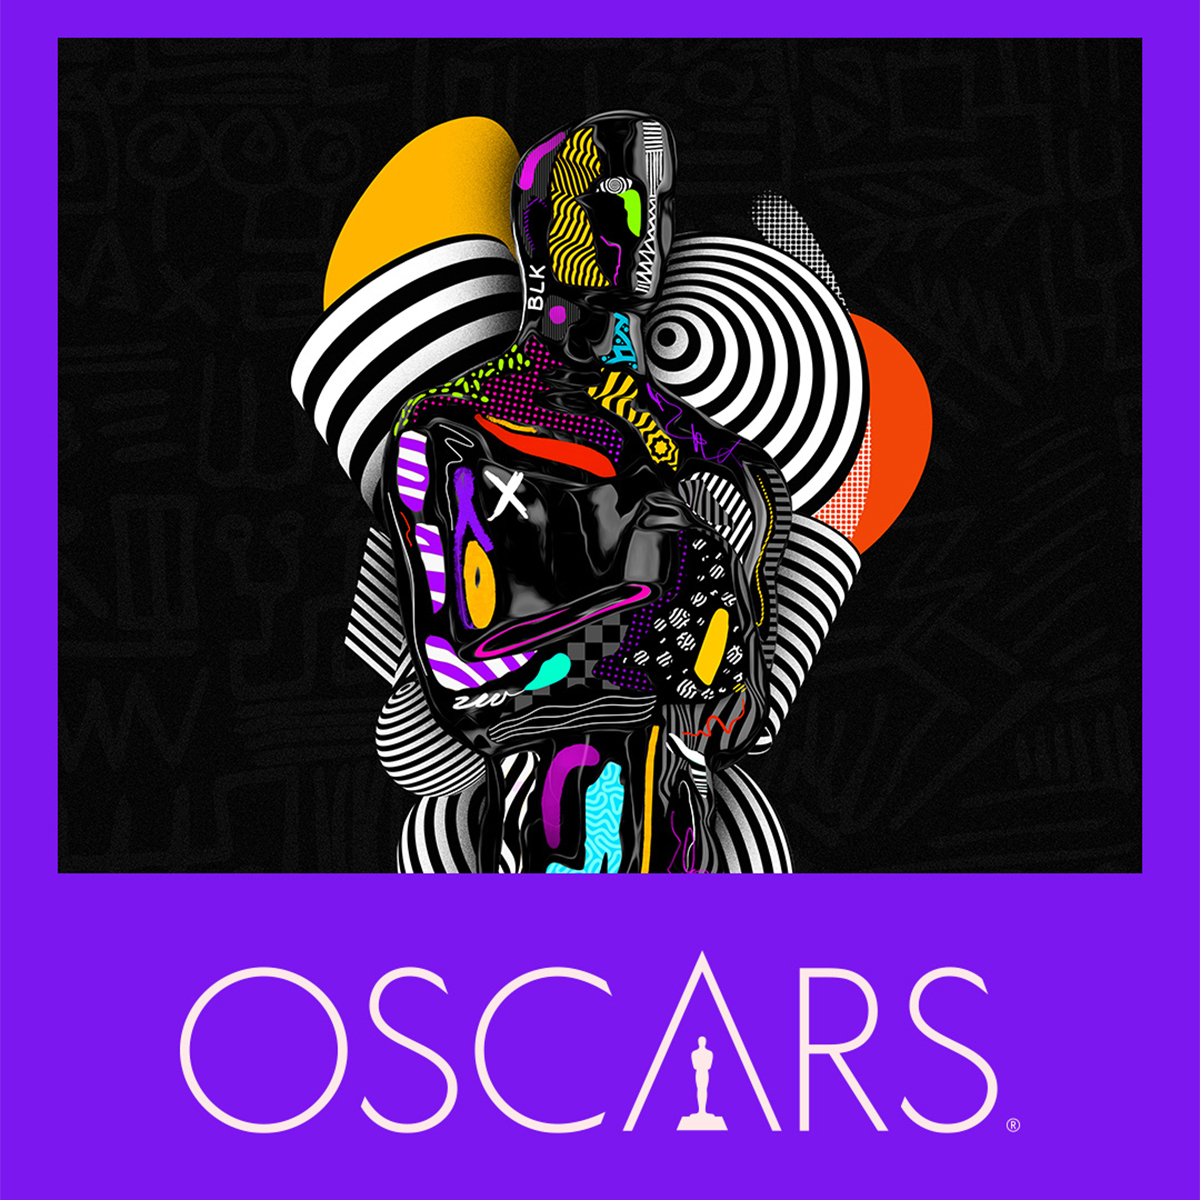 Oscars 2021: Full list of winners at the Academy Awards